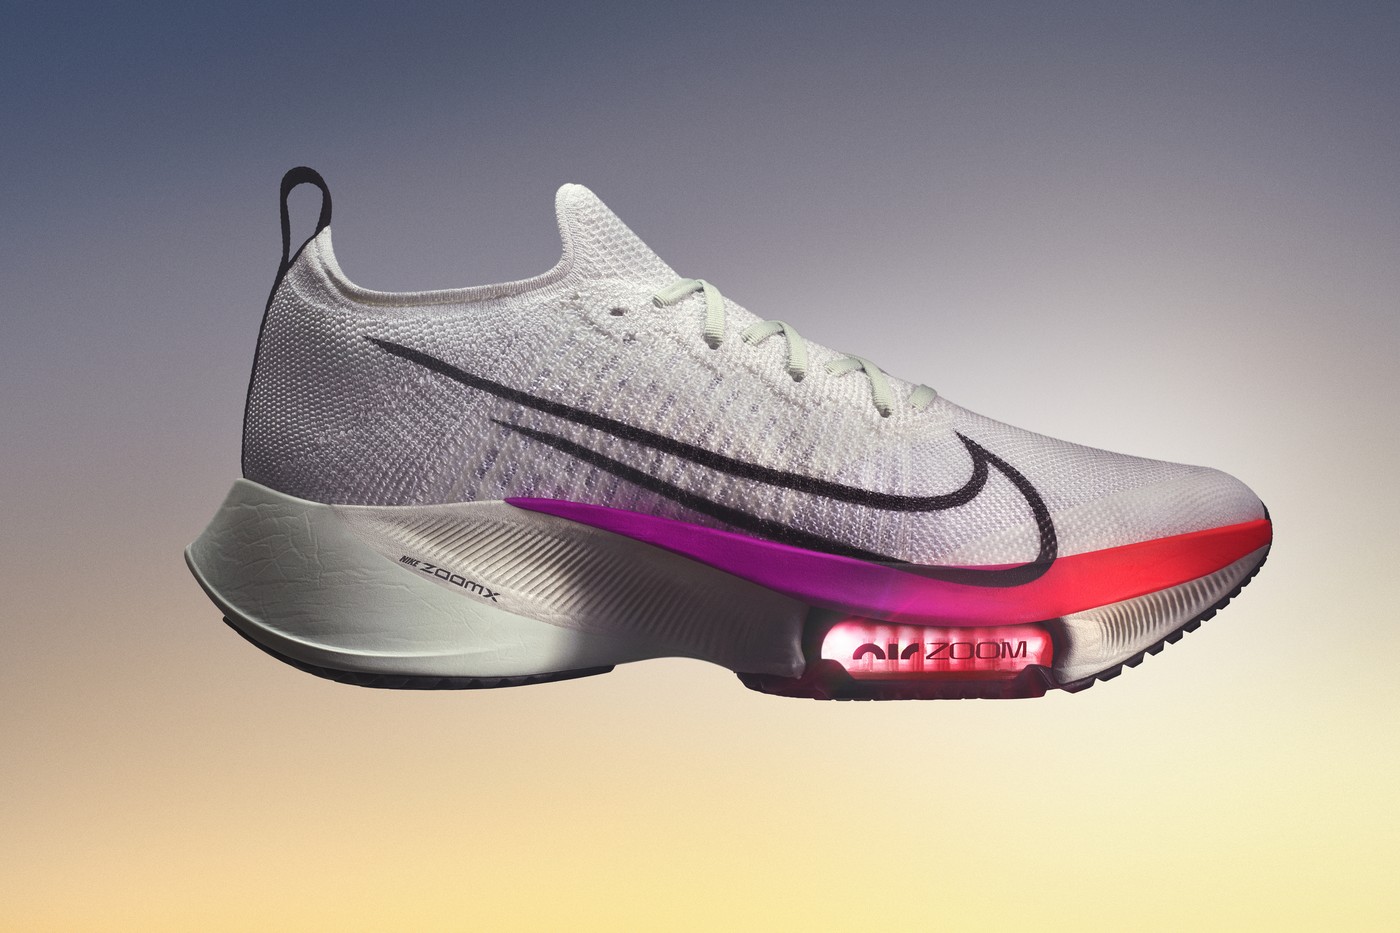 Nike's new fast training shoe 